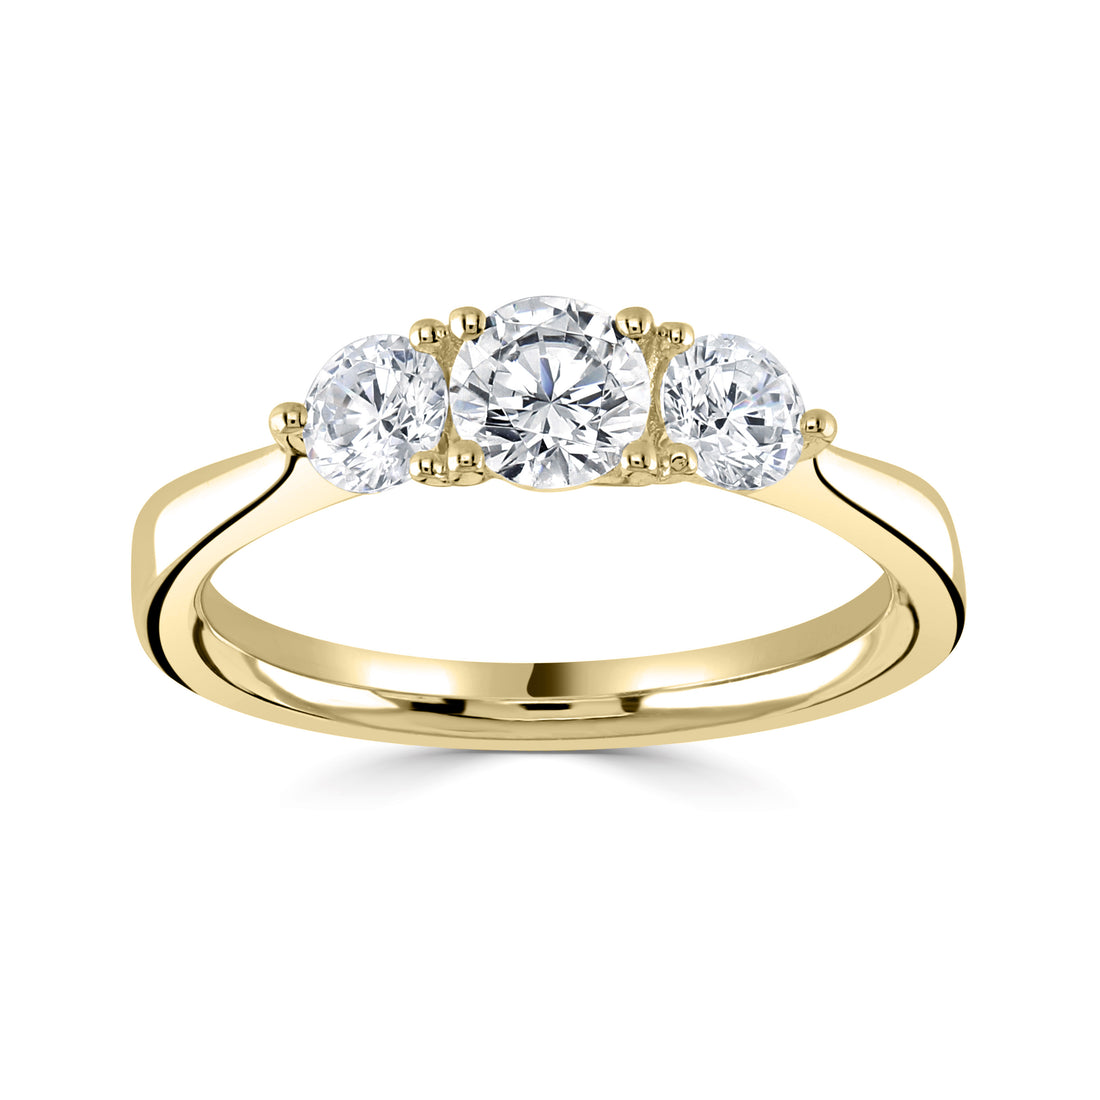 18CT YELLOW GOLD DIAMOND 3 STONE RING - Robert Anthony Jewellers, Edinburgh